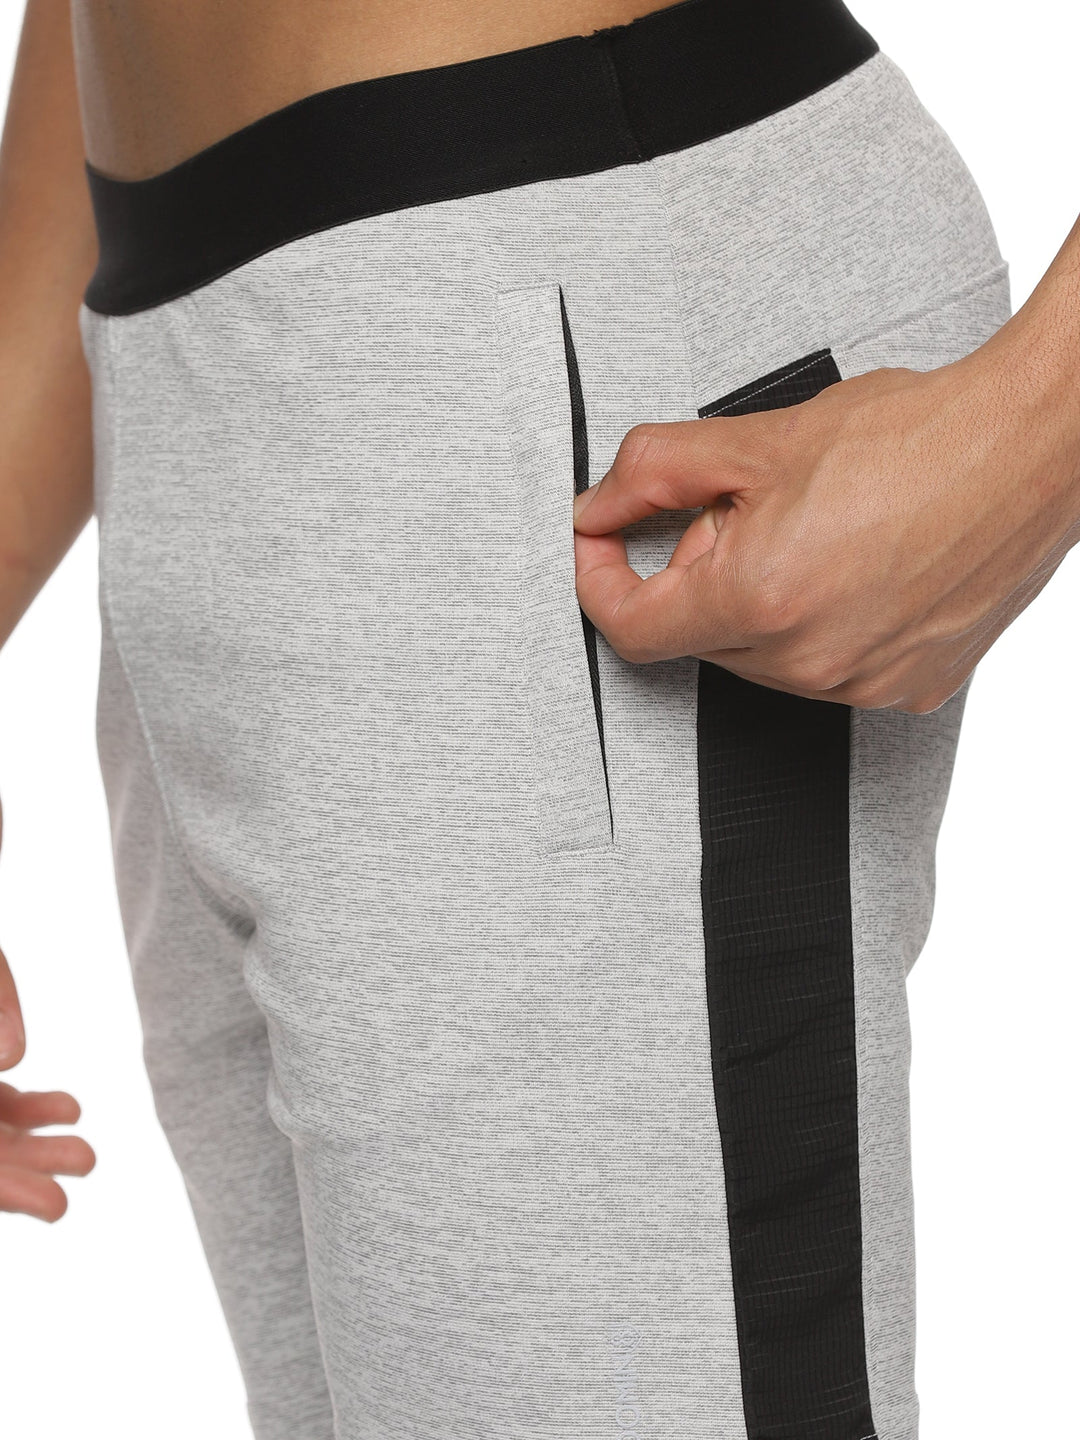 Men's Cut And Sew Training Shorts With Elastic Waist Band & Zipper Pockets (Grey)